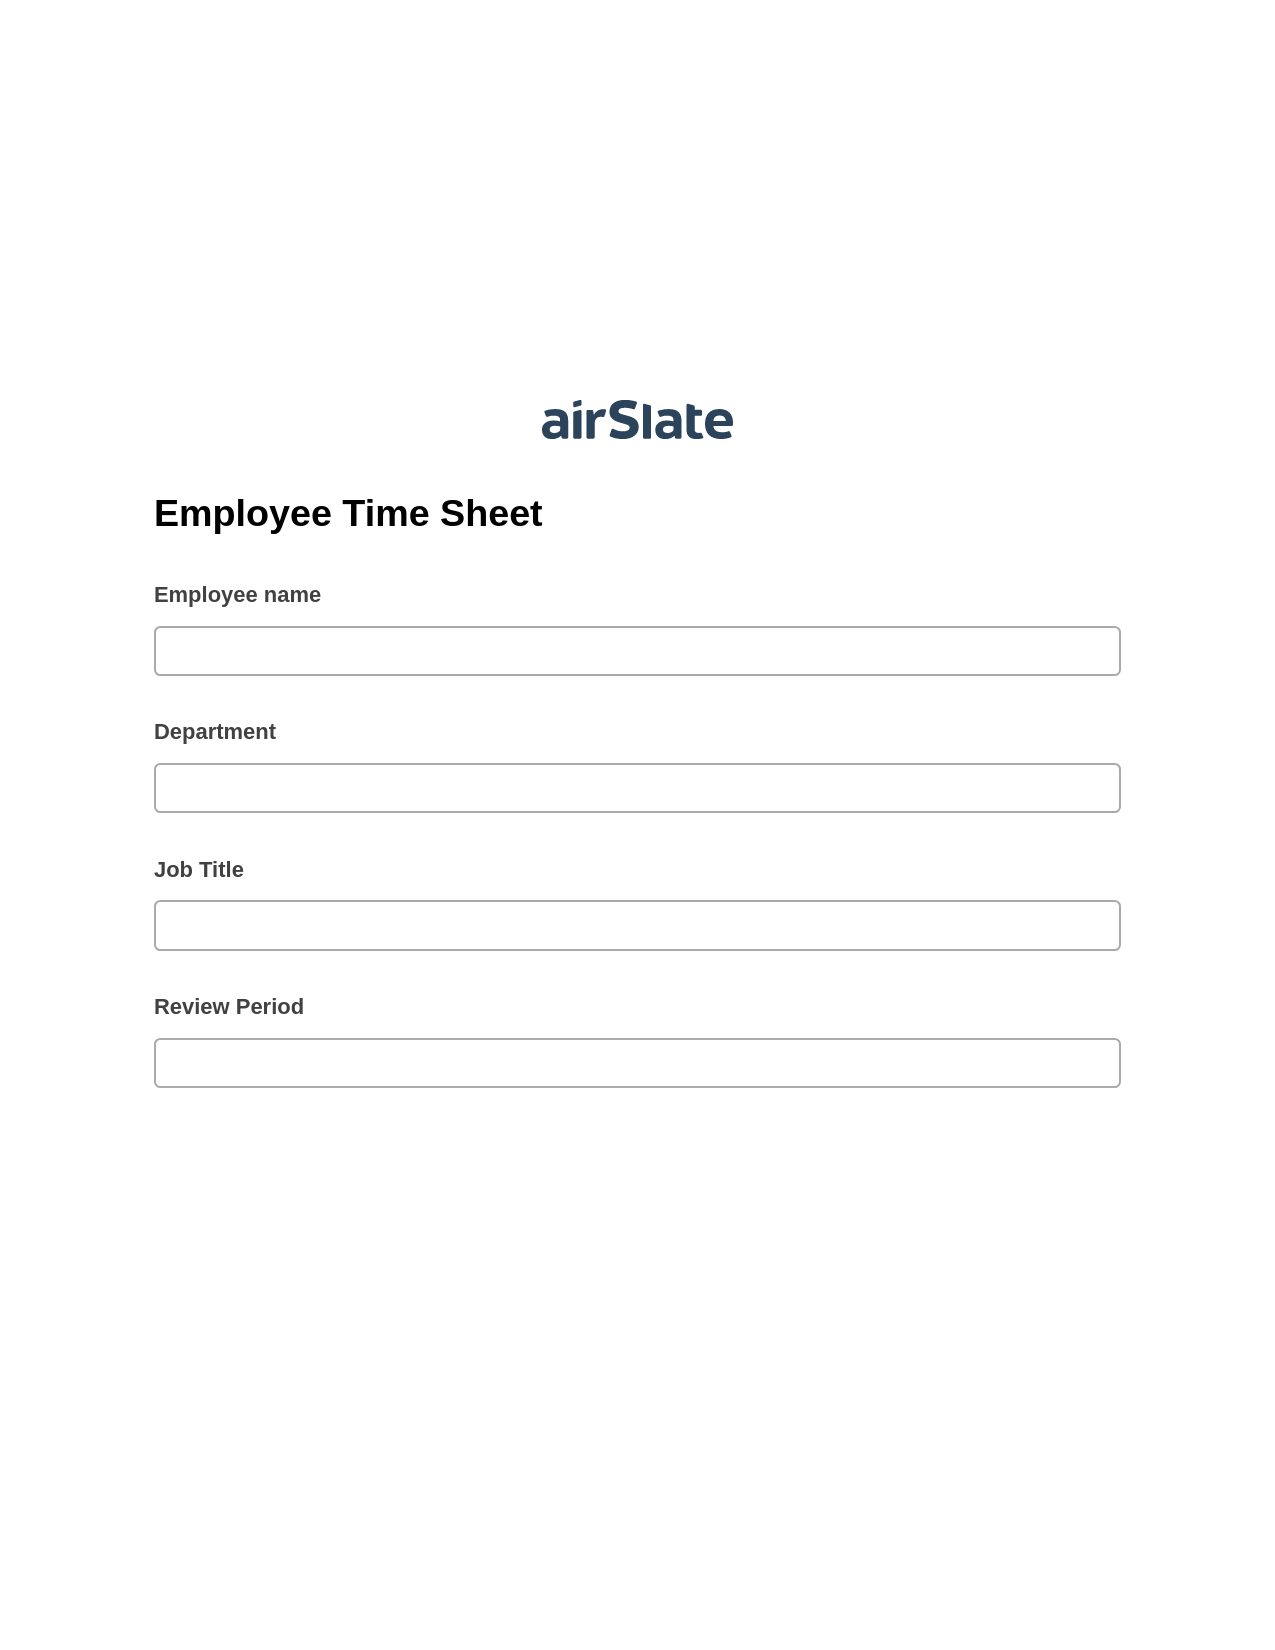 Employee Time Sheet Pre-fill from MySQL Bot, Create slate addon, Archive to SharePoint Folder Bot